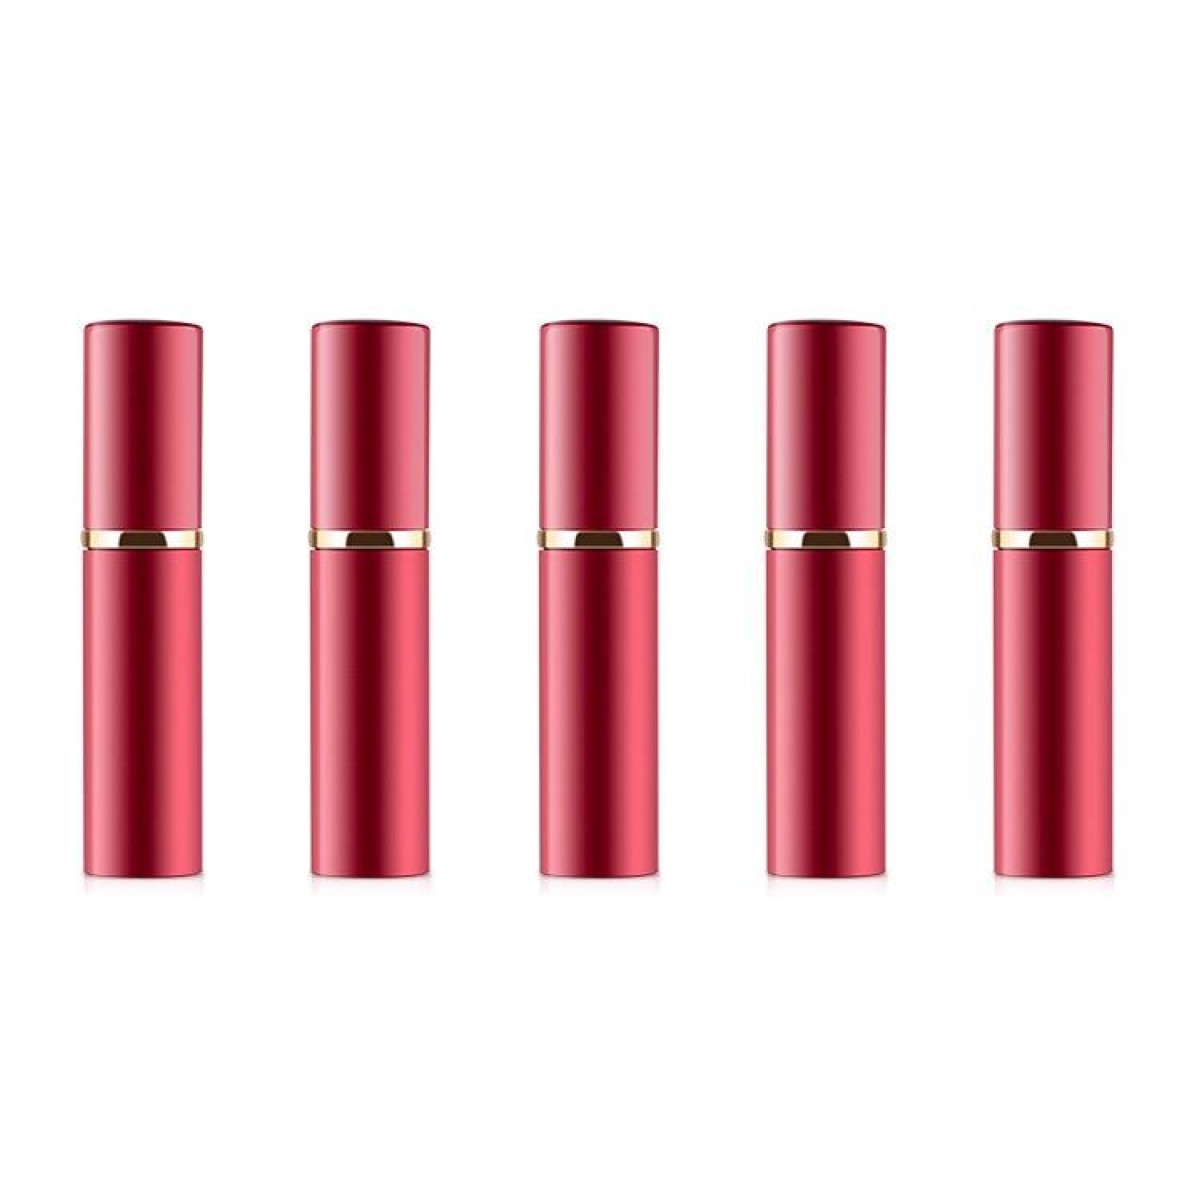 Portable Mini Refillable Glass Perfume Fine Mist Atomizers with Metallic Exterior, 5ml (Red)